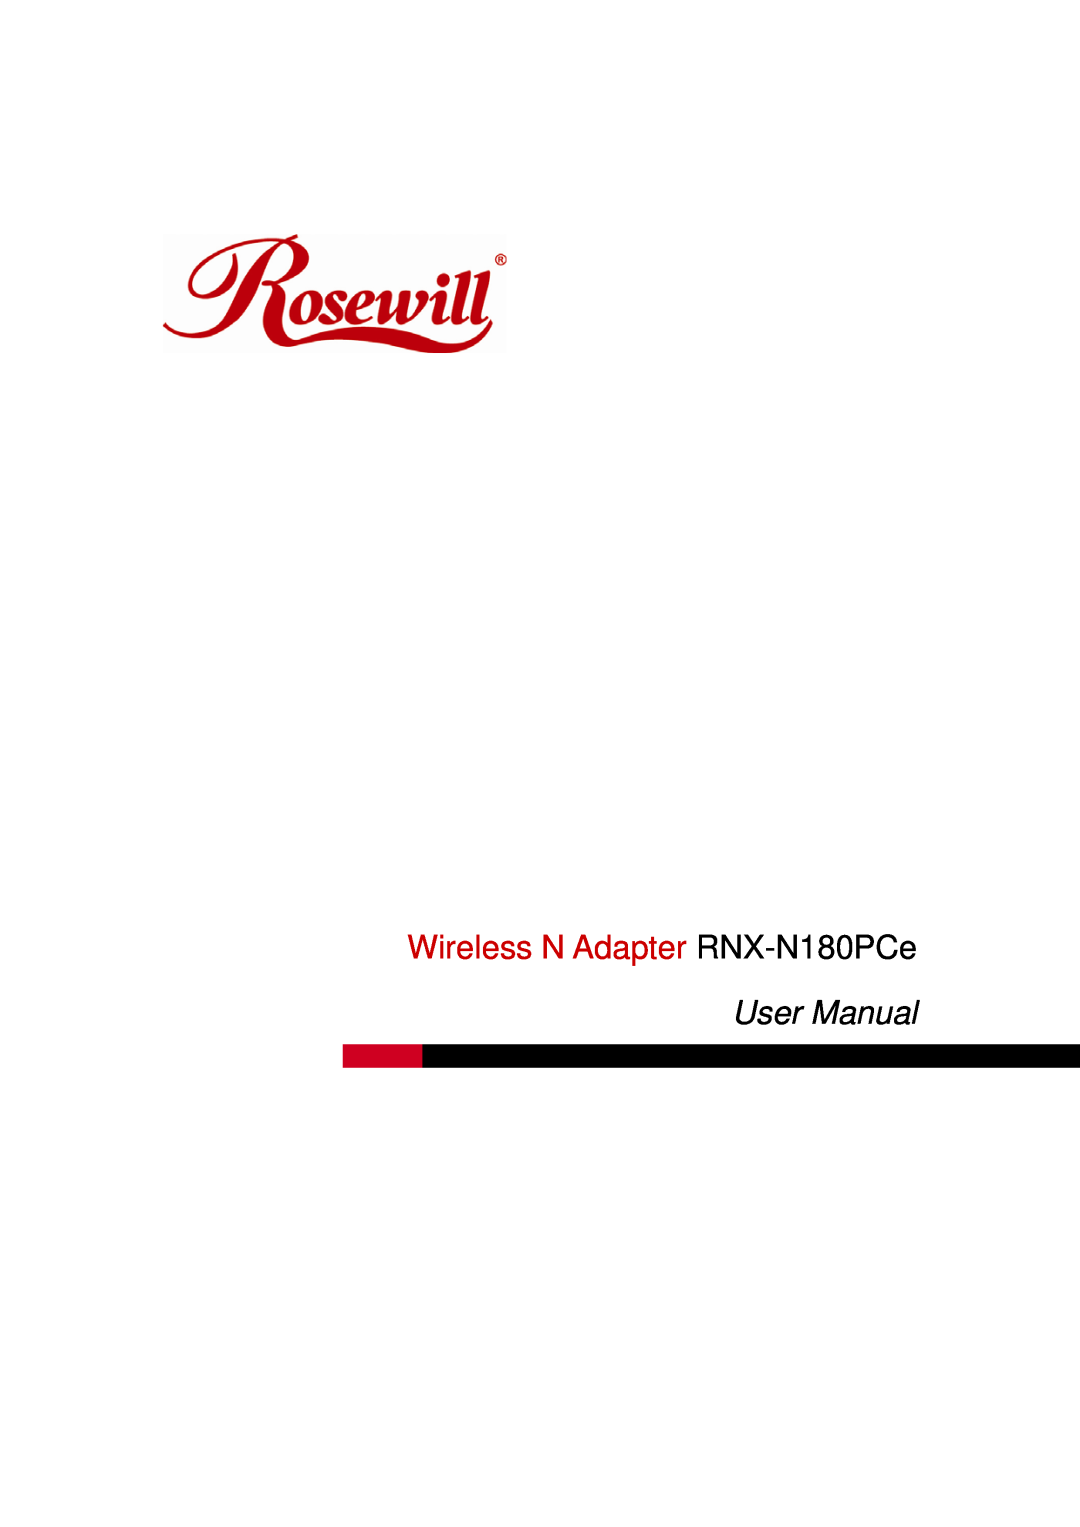 Rosewill RNX-N180PCE user manual Wireless N Adapter RNX-N180PCe, User Manual 